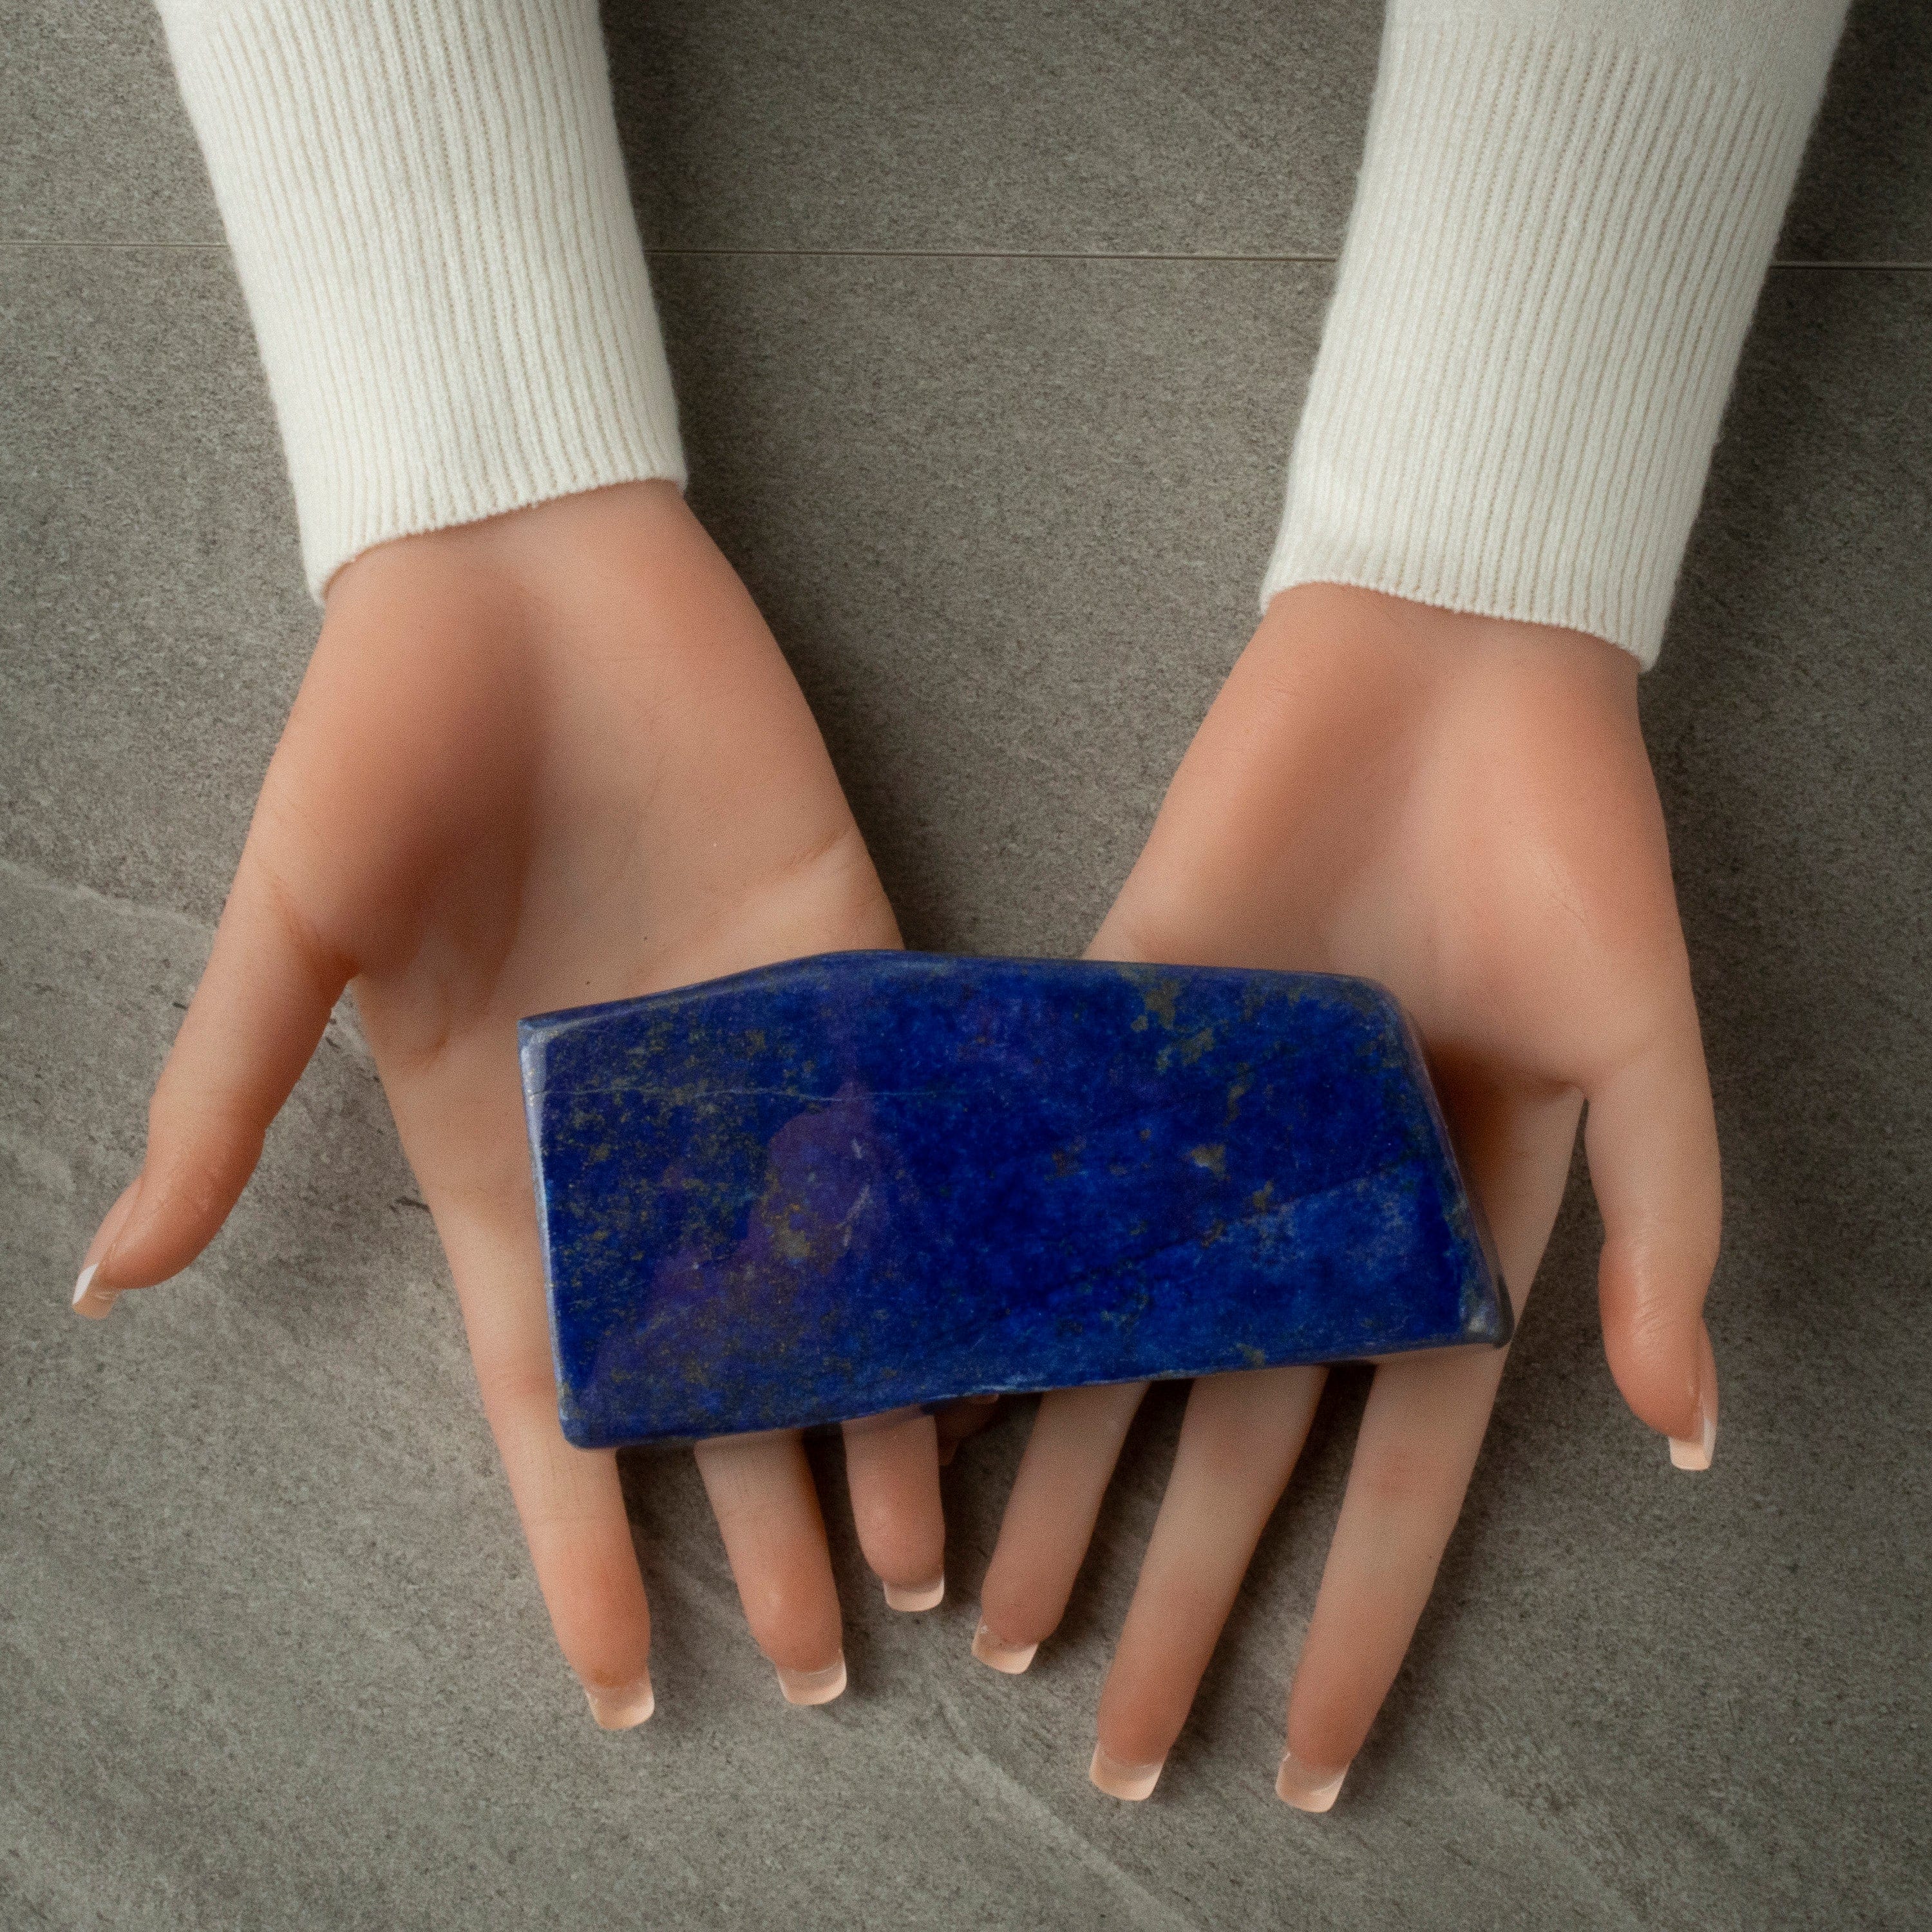 Kalifano Lapis Lapis Lazuli Freeform from Afghanistan - 2.5" / 858 grams LP900.011